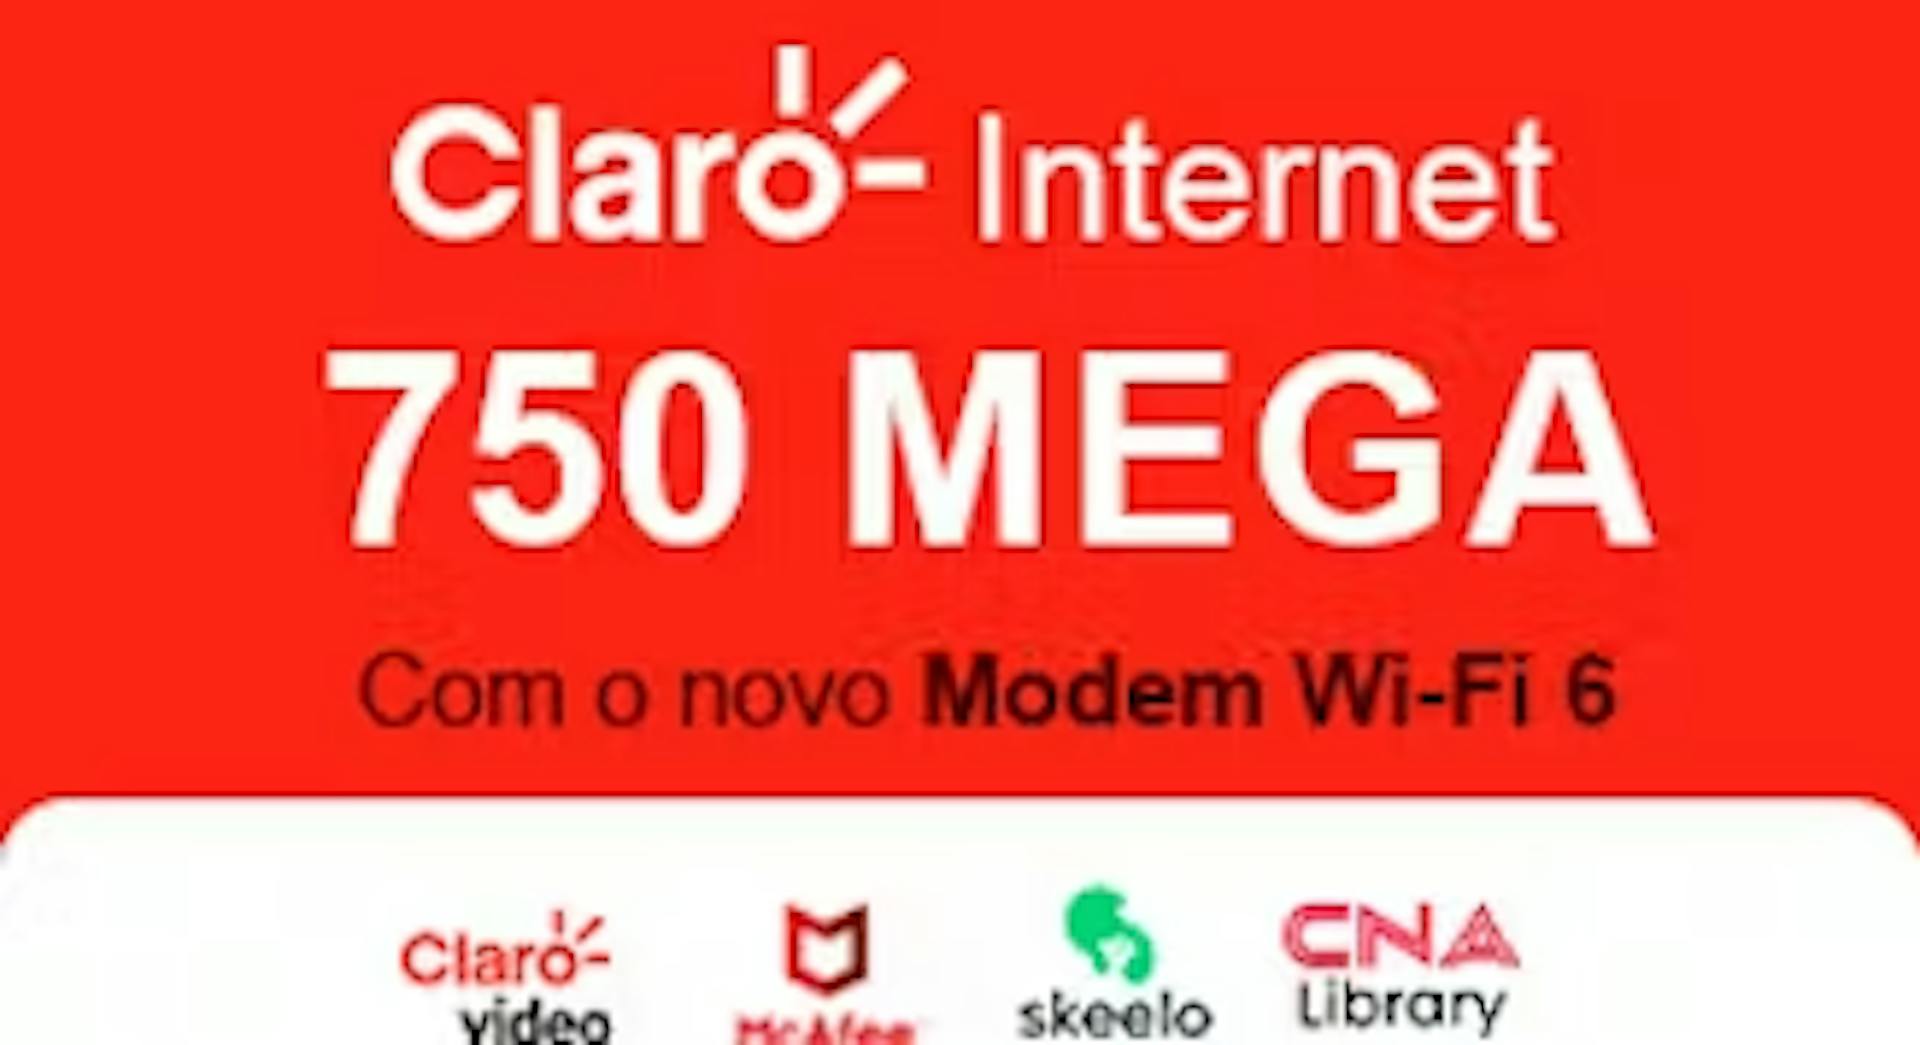 claro internet 750 mega